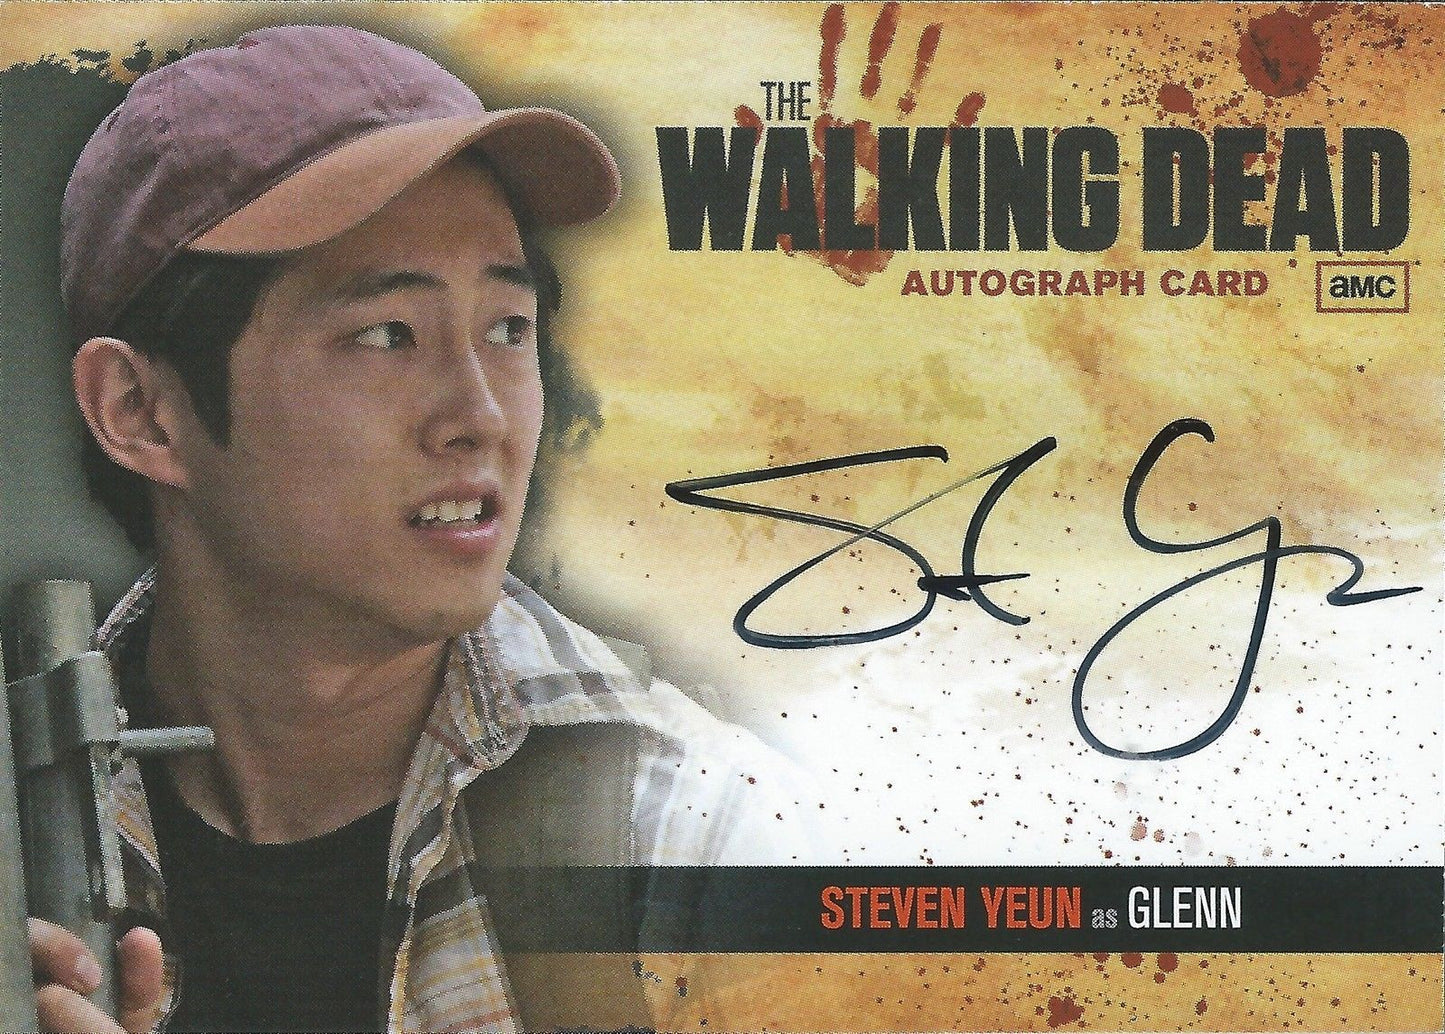 2011 AMC The Walking Dead STEVEN YEUN Auto as GLENN